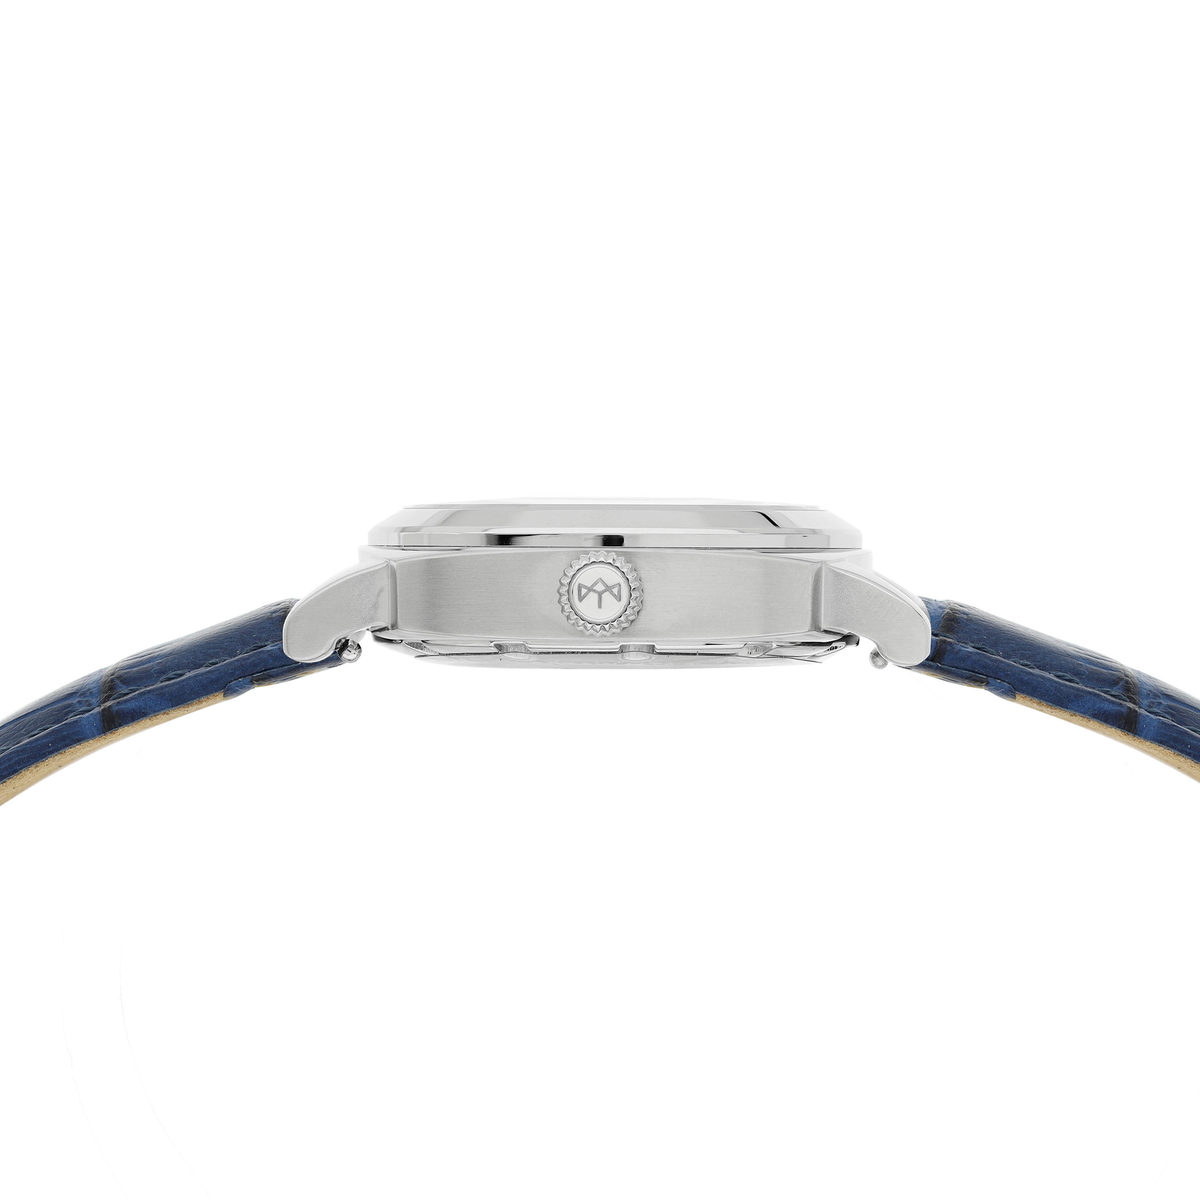 Montre MATY GM automatique cadran bleu bracelet cuir bleu - vue 2